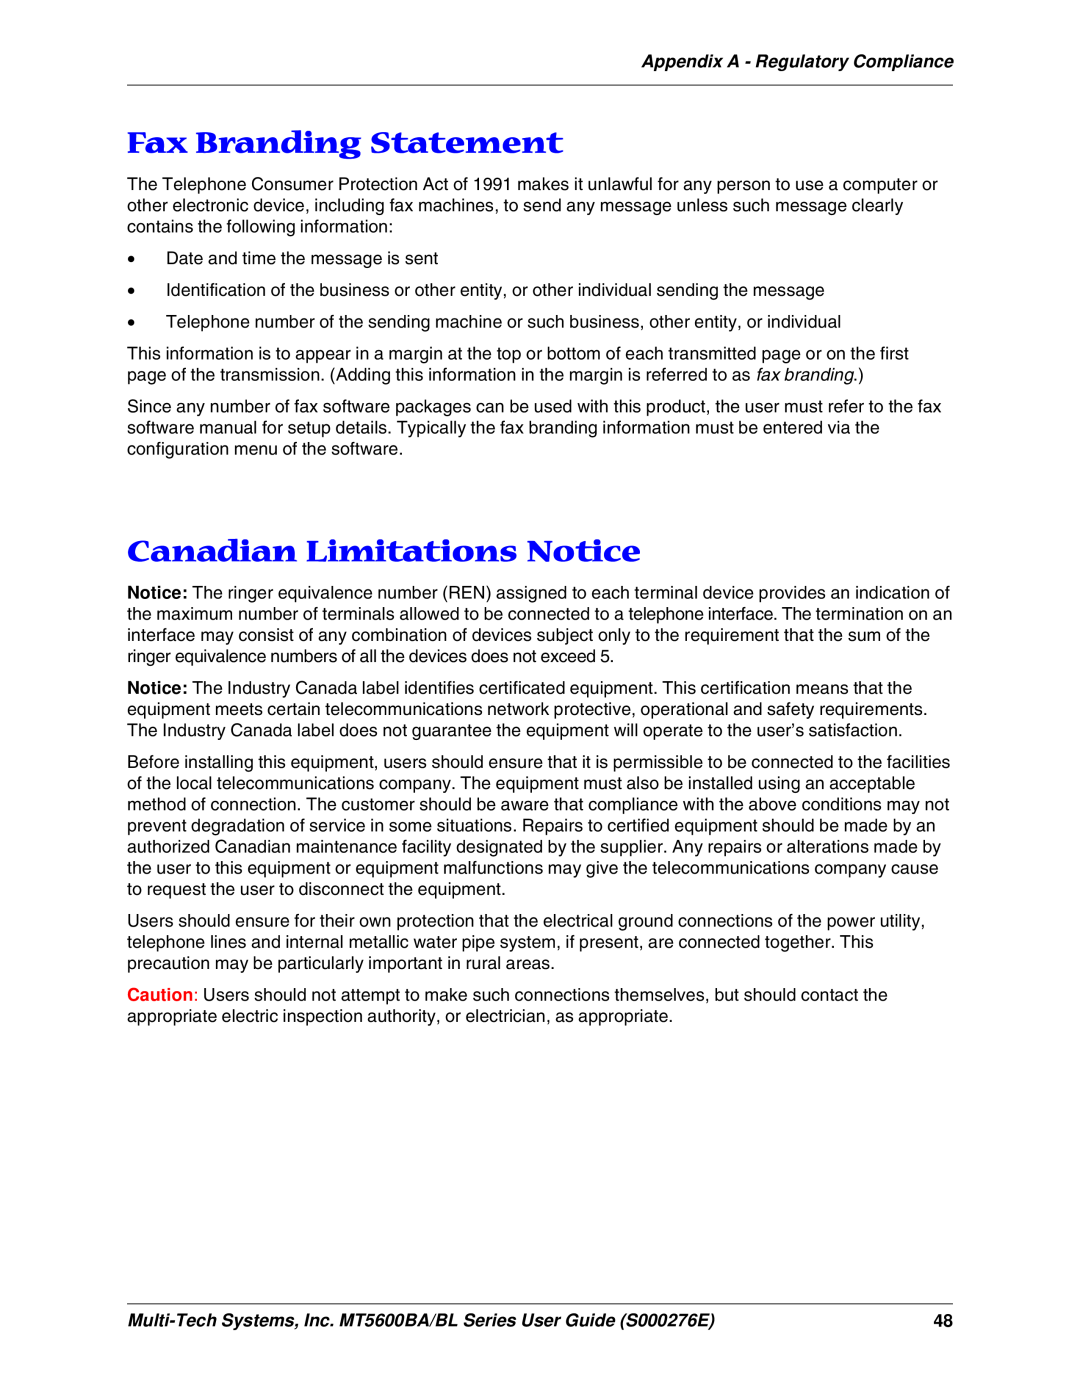 Multitech MT5600BL, MT5600BA manual Fax Branding Statement, Canadian Limitations Notice 